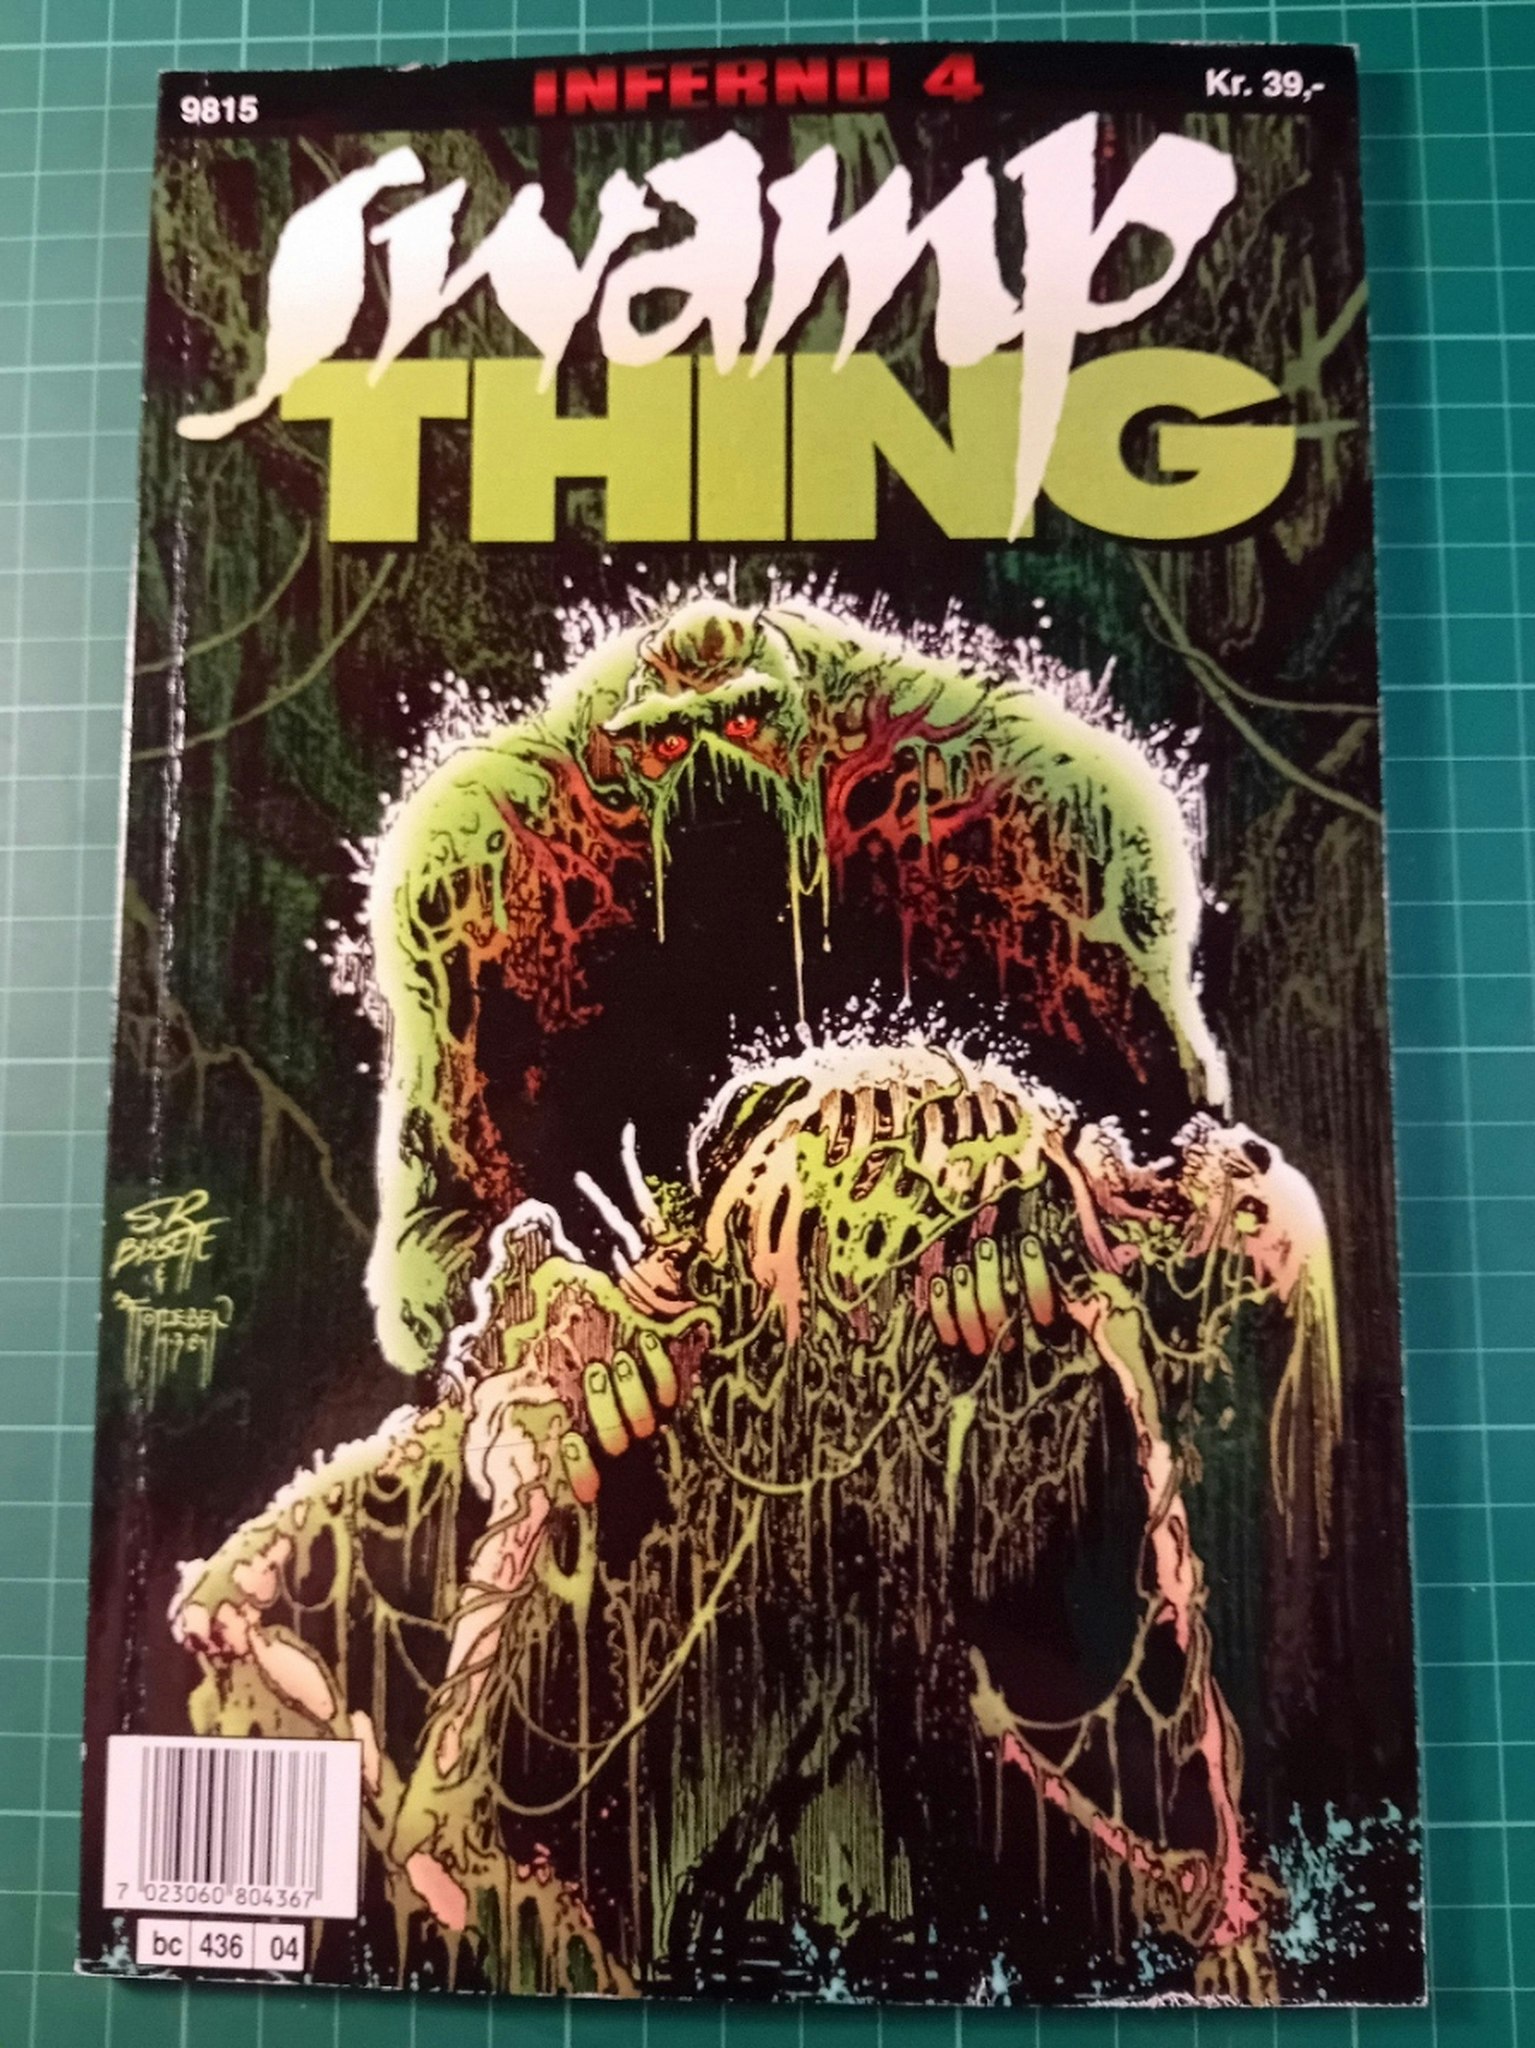 Inferno album 04 Swamp Thing